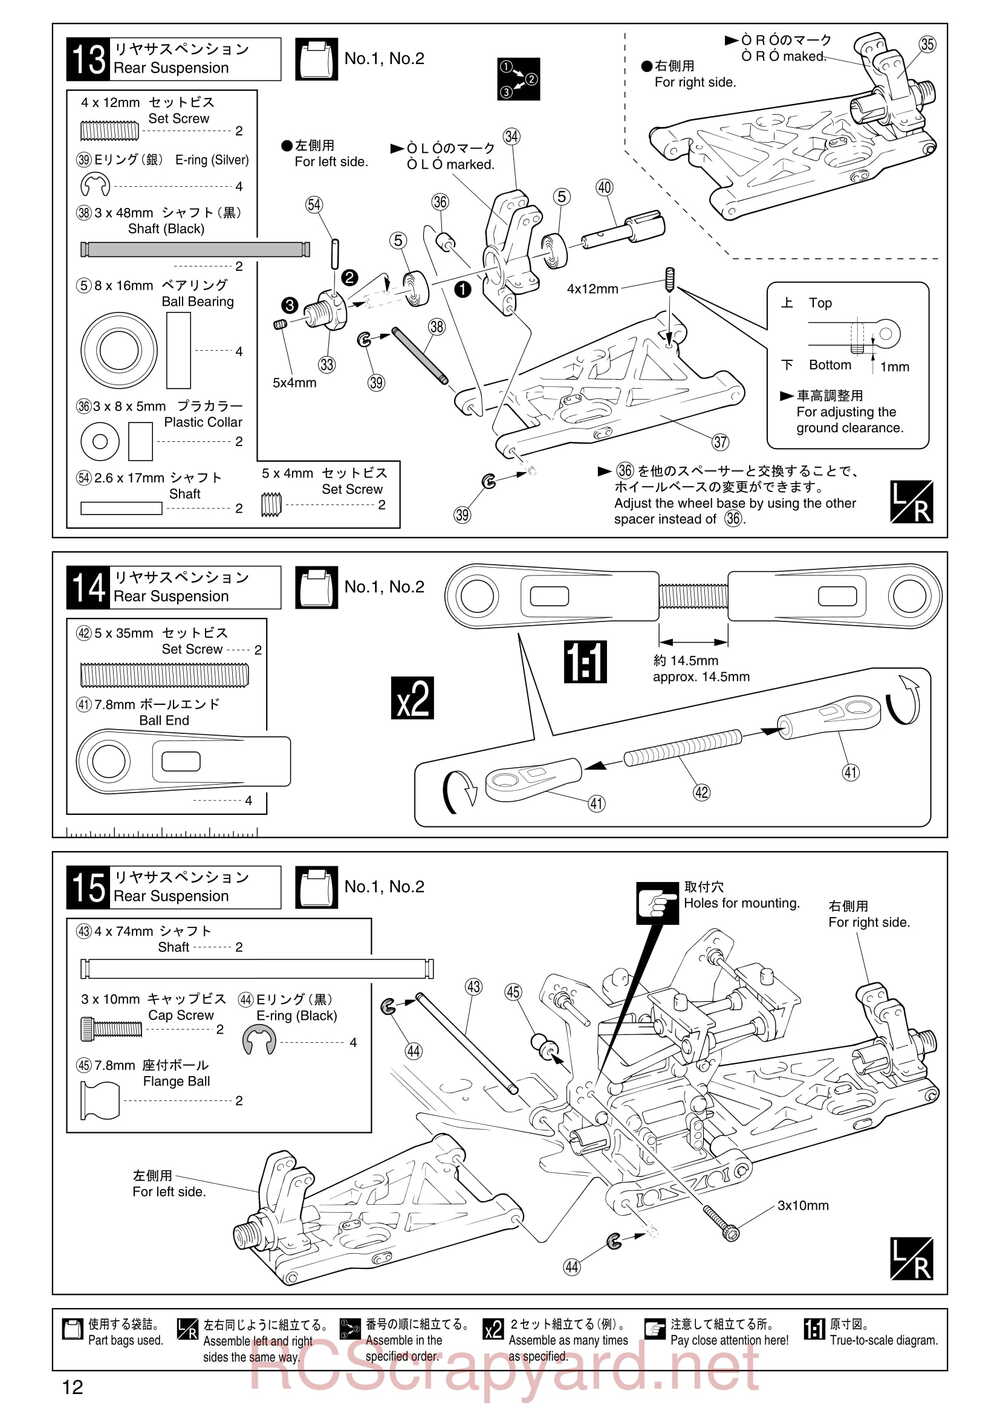 Kyosho - 31192 - Inferno-MP-7-5 Sports - Manual - Page 12